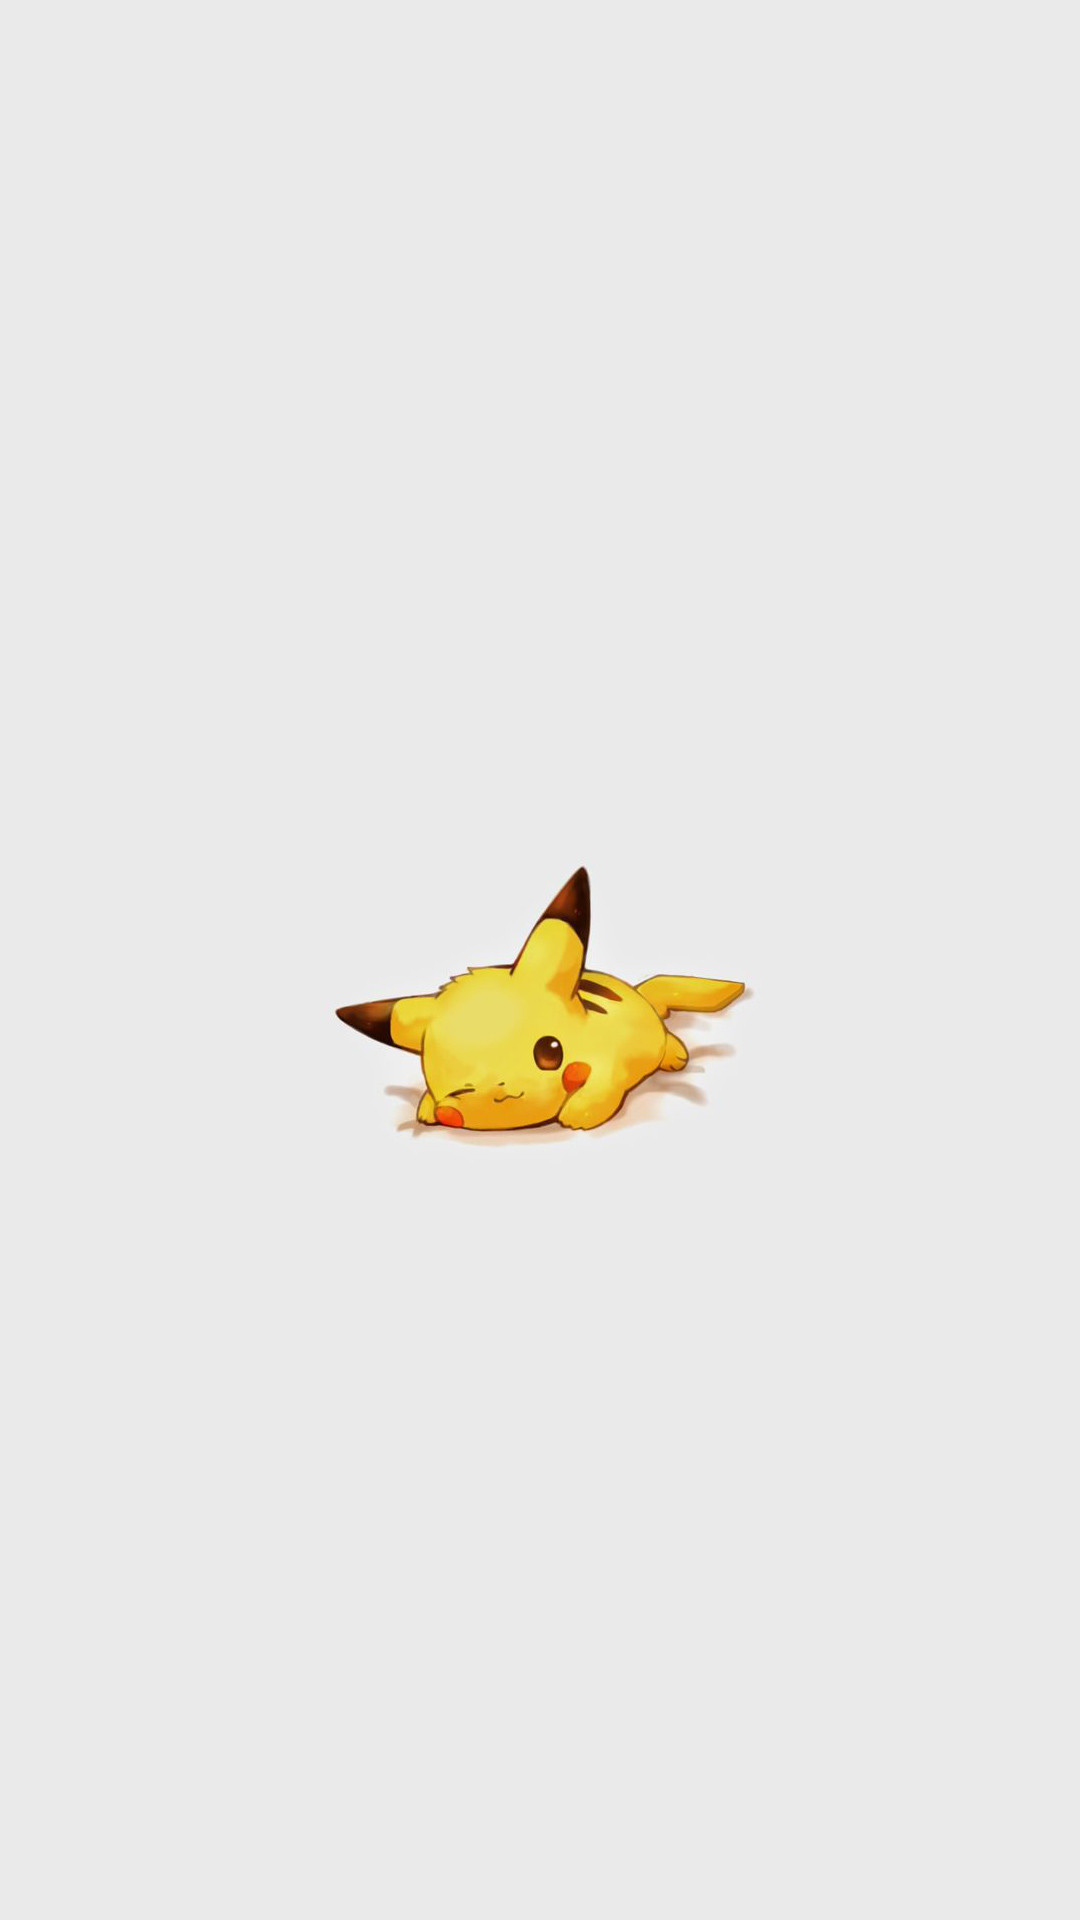 Cute Pikachu Pokemon Character iPhone 6 HD Wallpaper – https / / freebestpicture